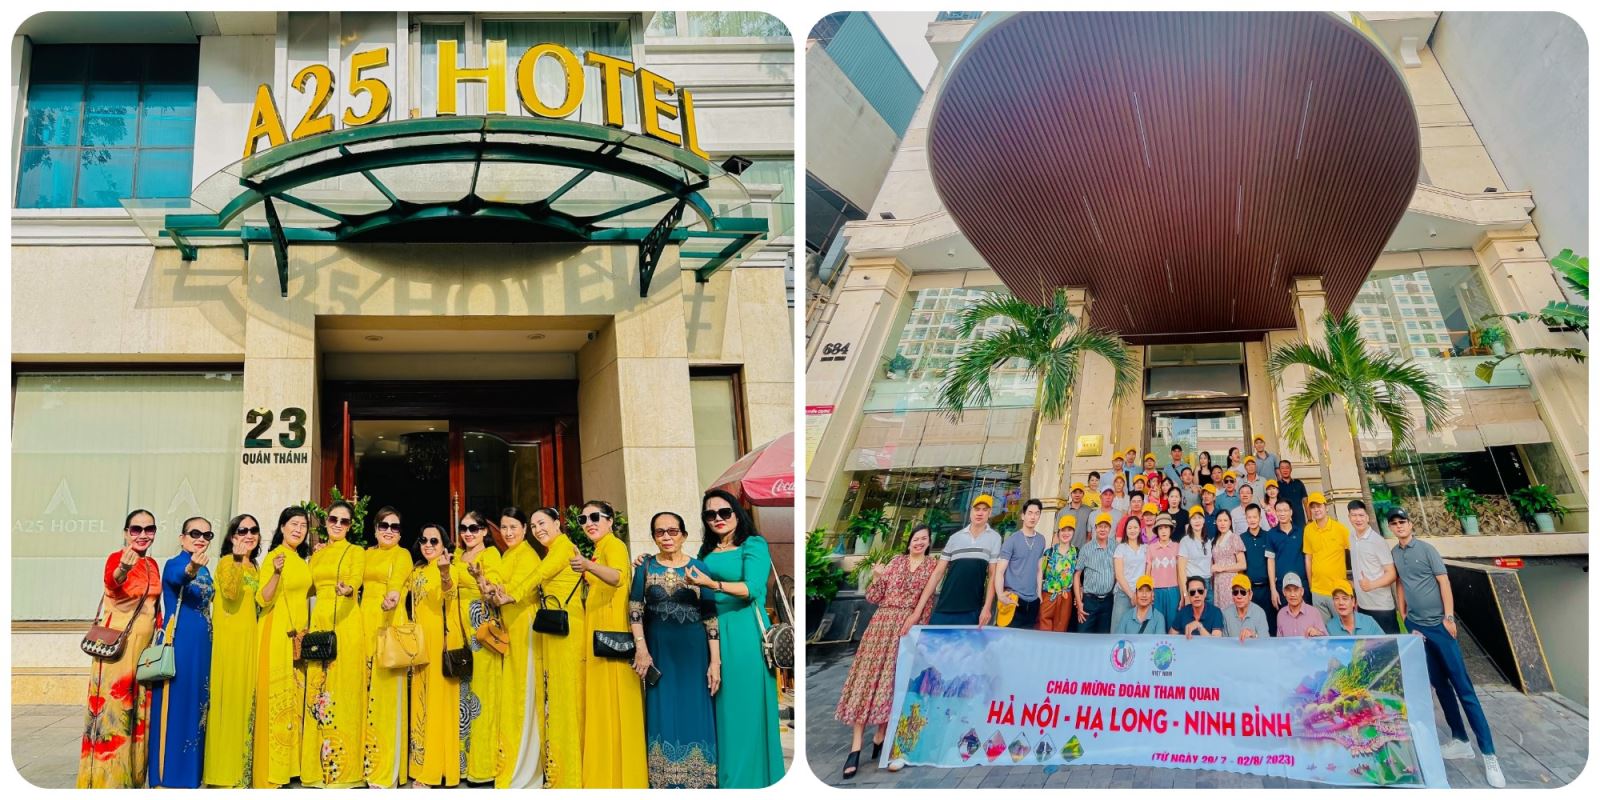 a25-hotel-in-your-area-feedback-cuoi-tuan-ran-ran-khen-ngoi”